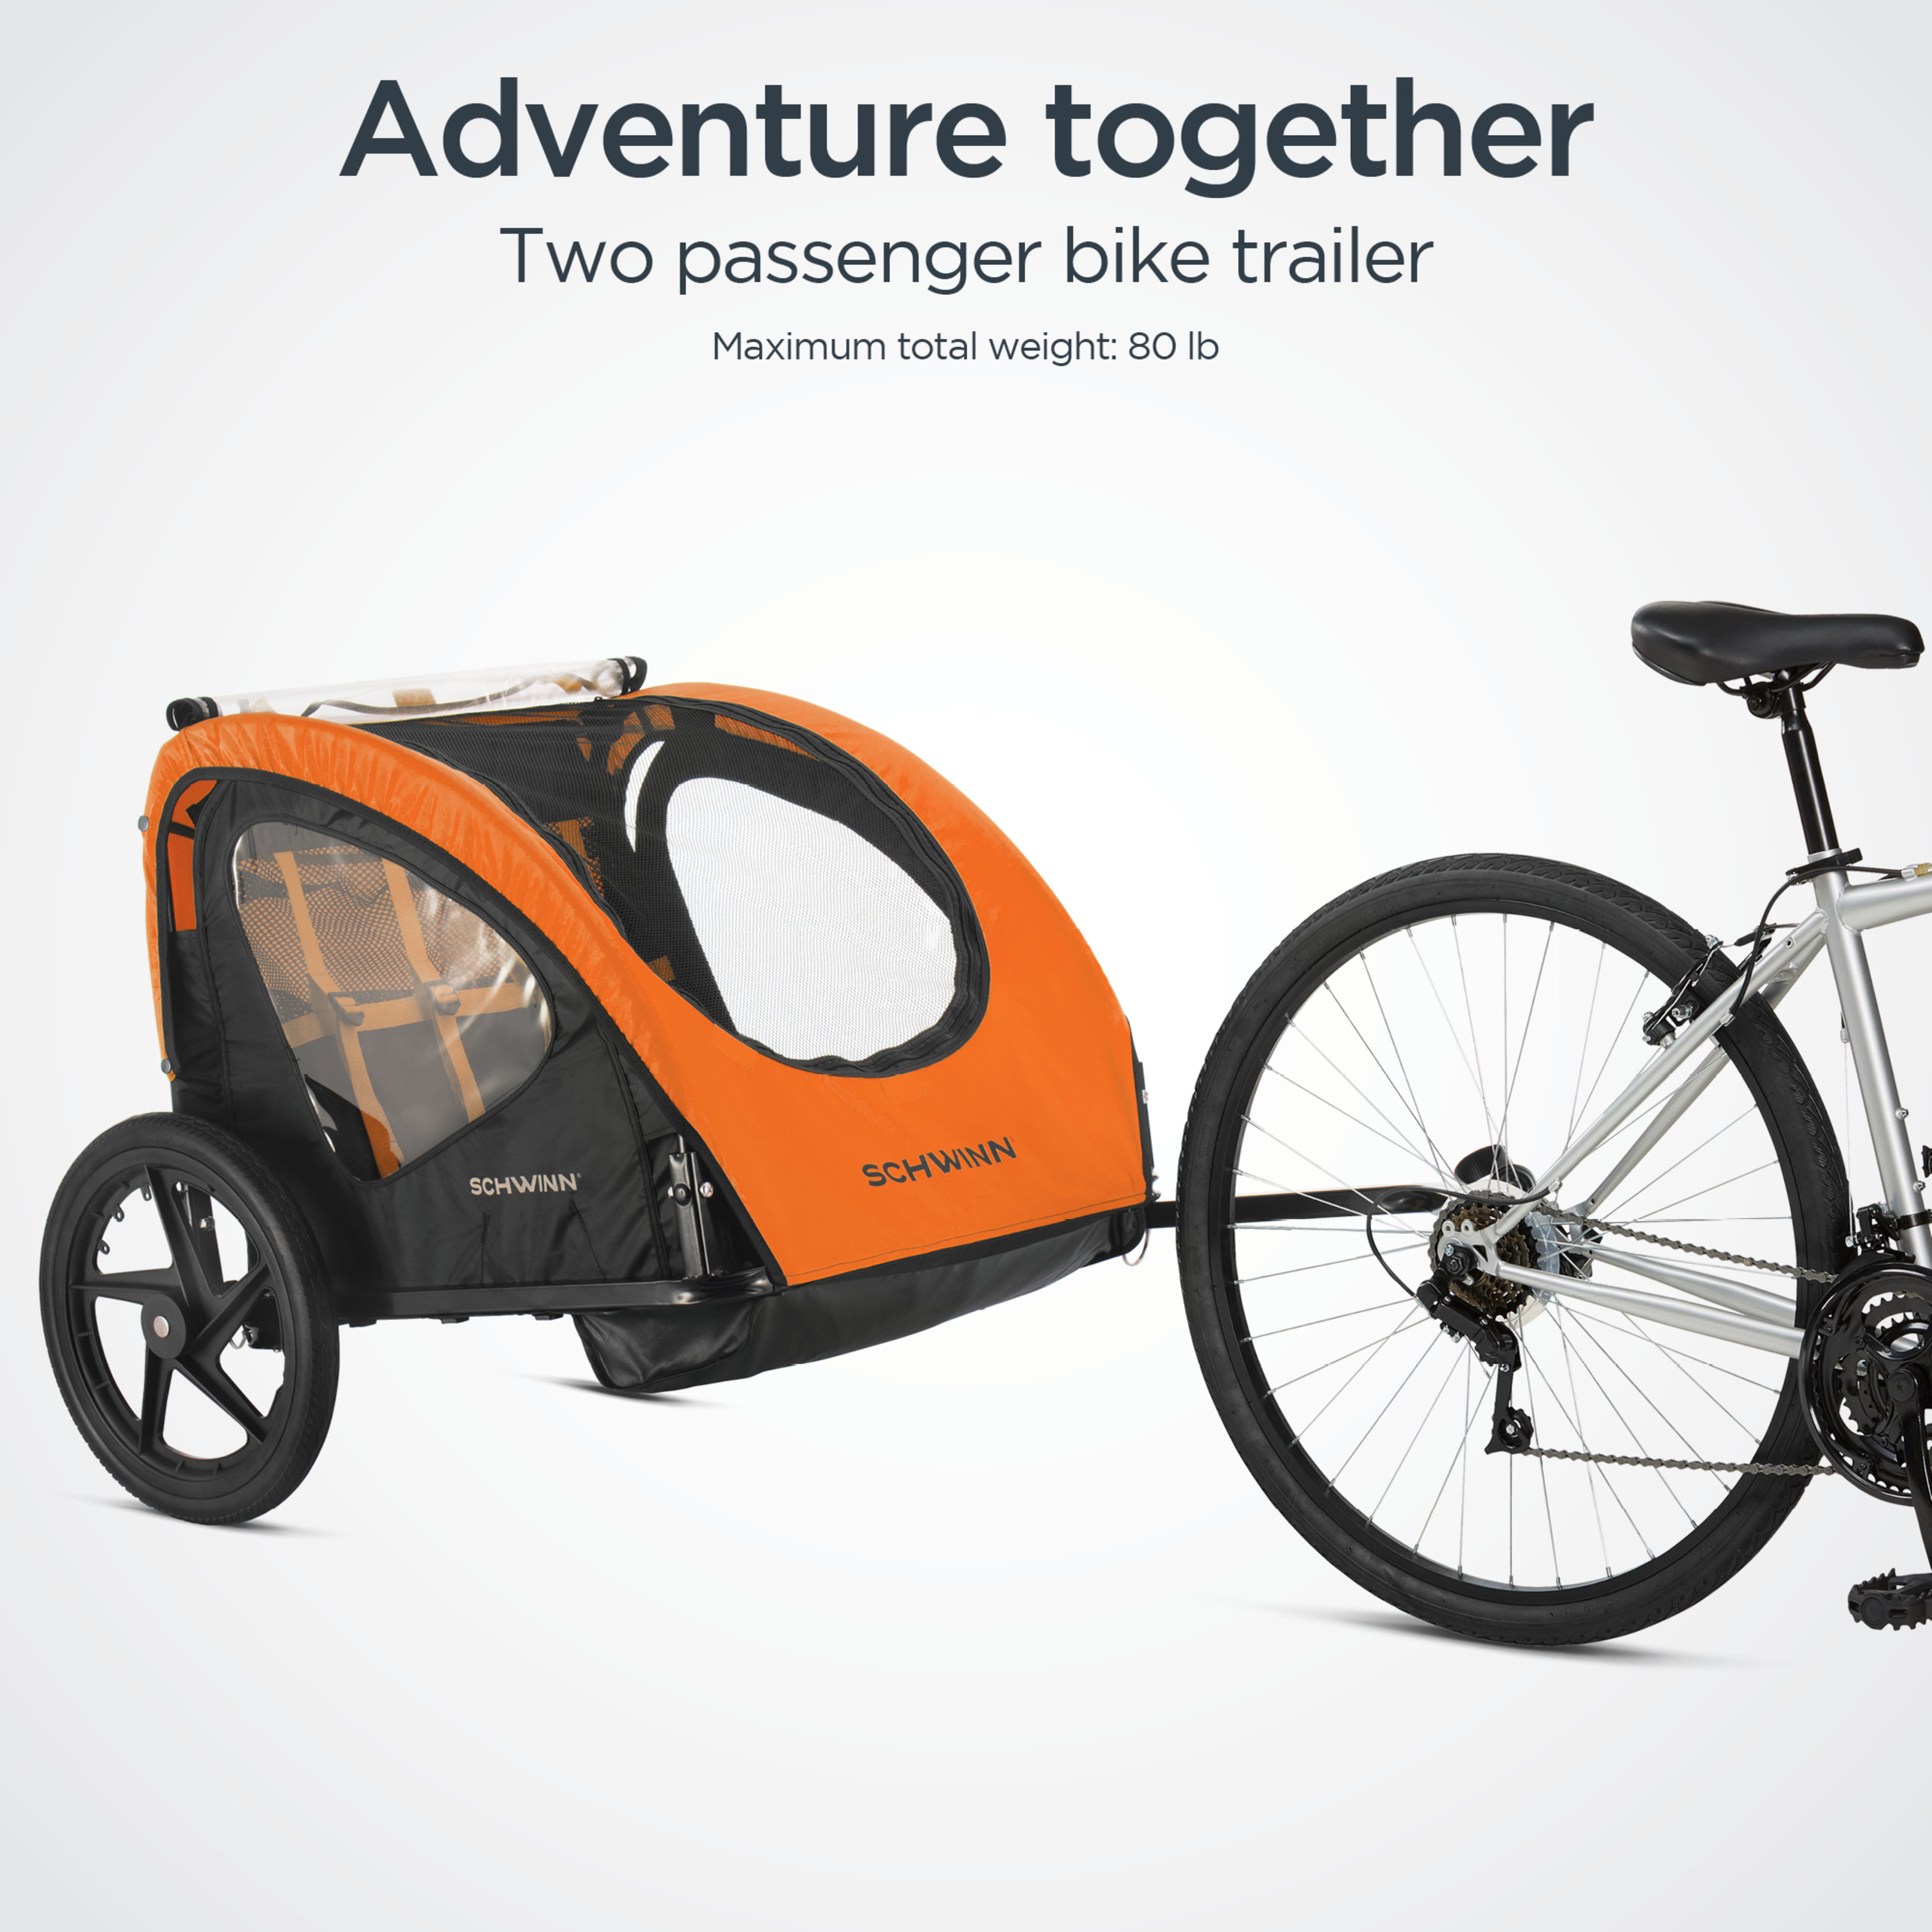 Schwinn Shuttle Foldable 2 Seat Child Bike Trailer, Orange & Black - image 5 of 8